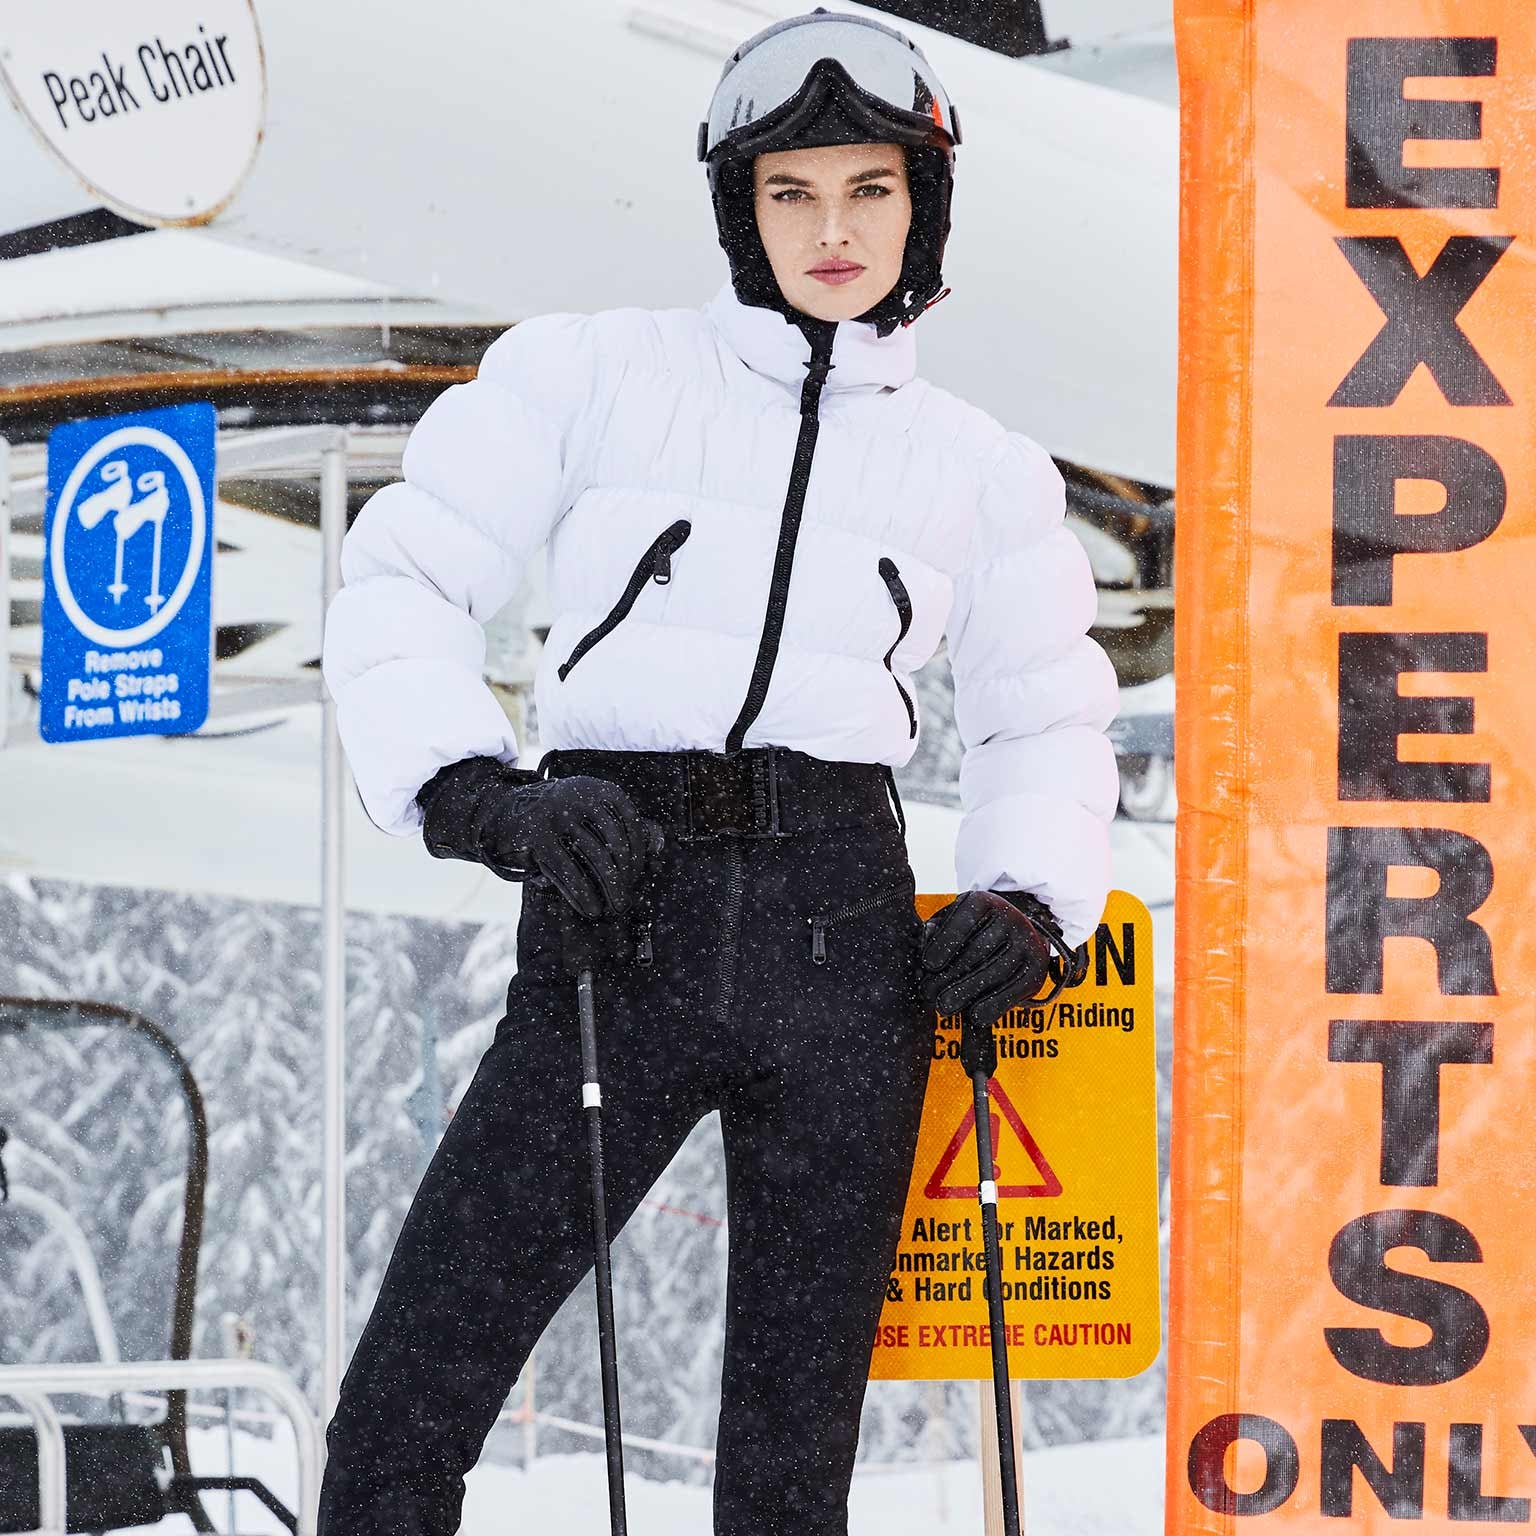 London Ski Co  Destination for Exclusive Ski Clothing